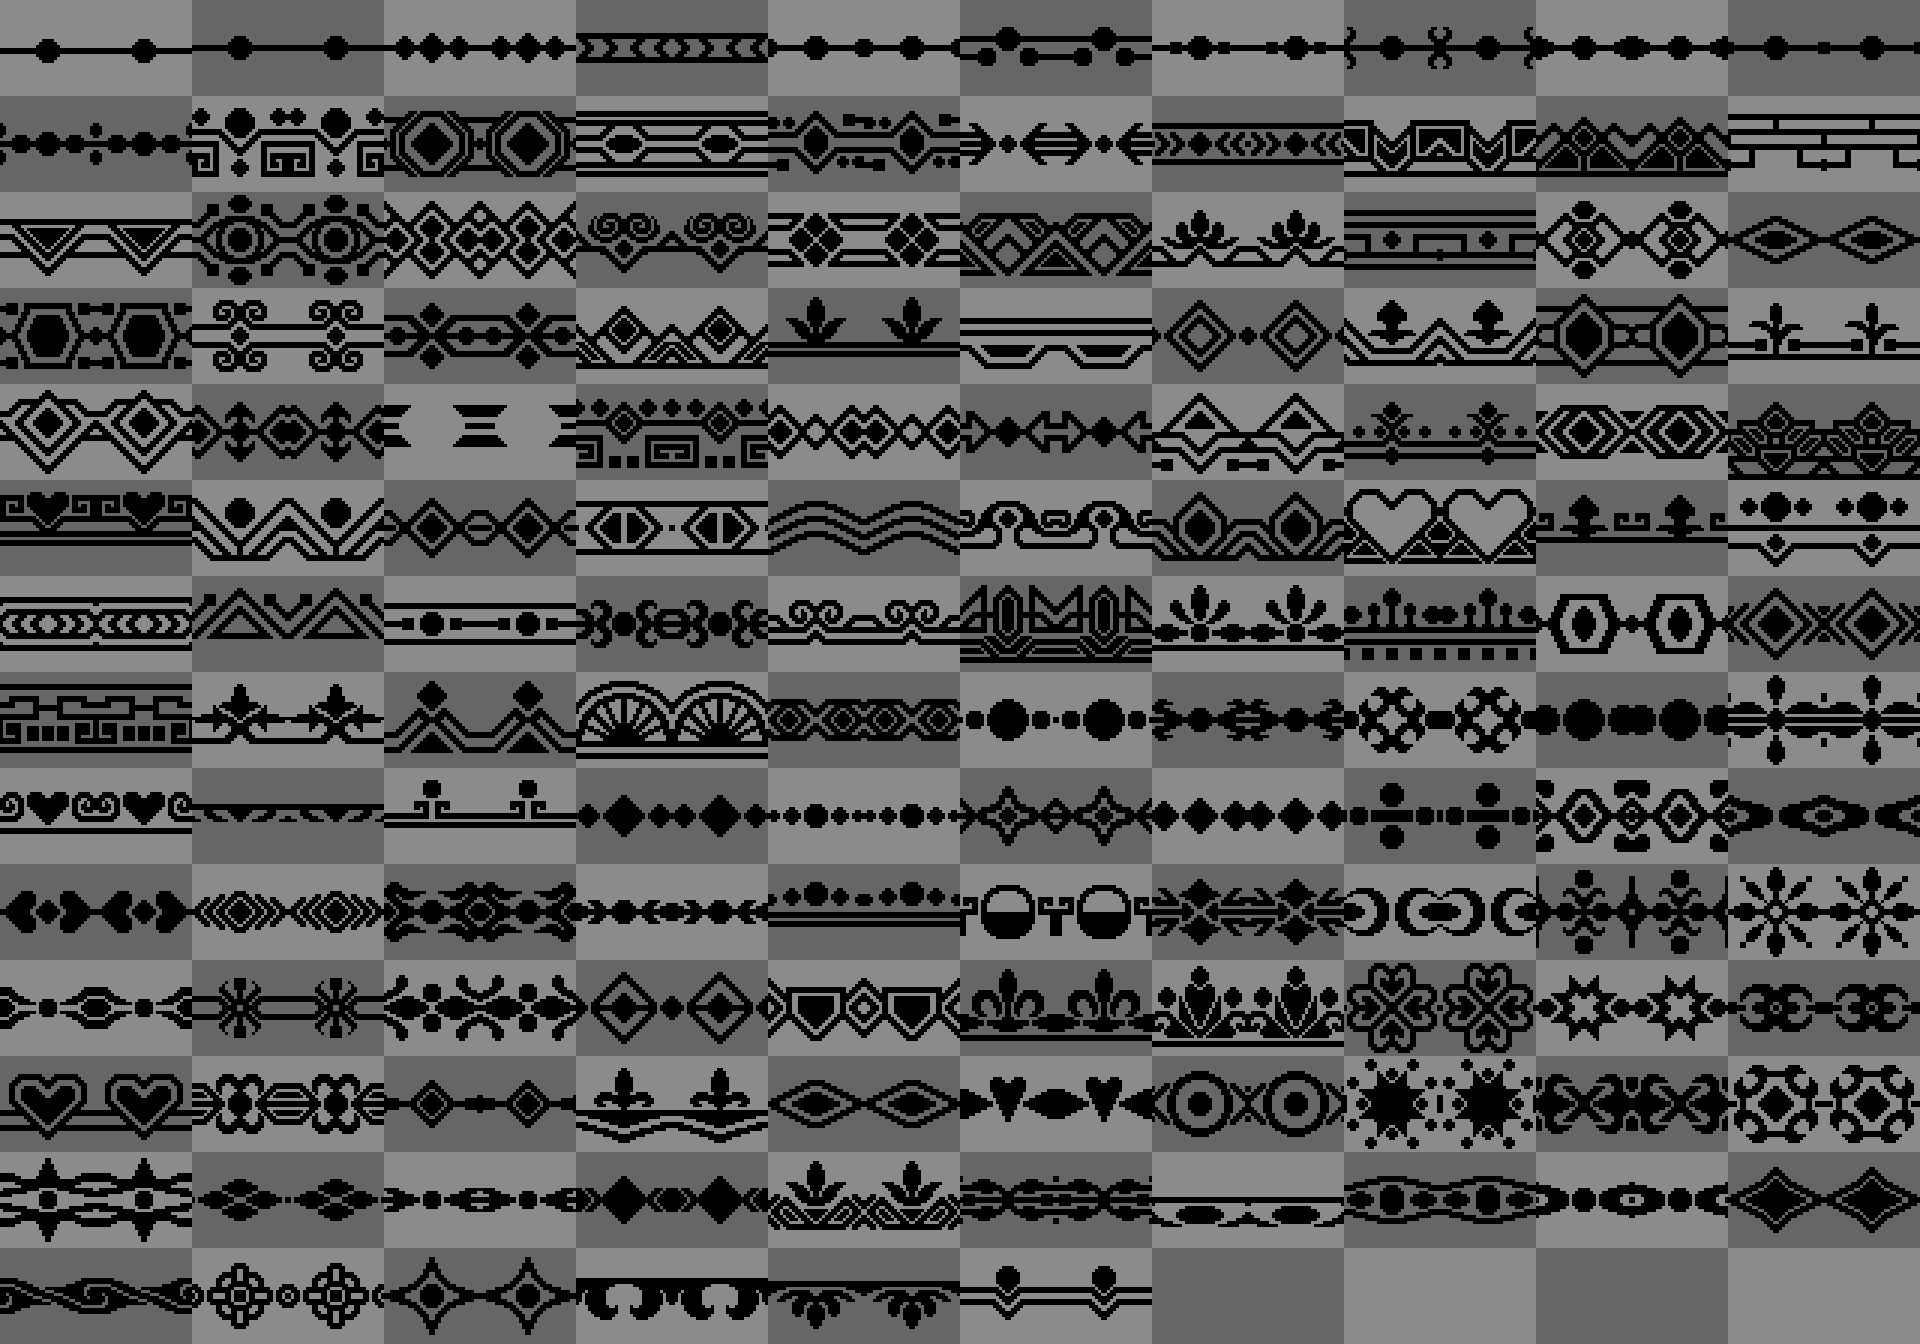 Customs decorative pixel elements part All by BDragon1727